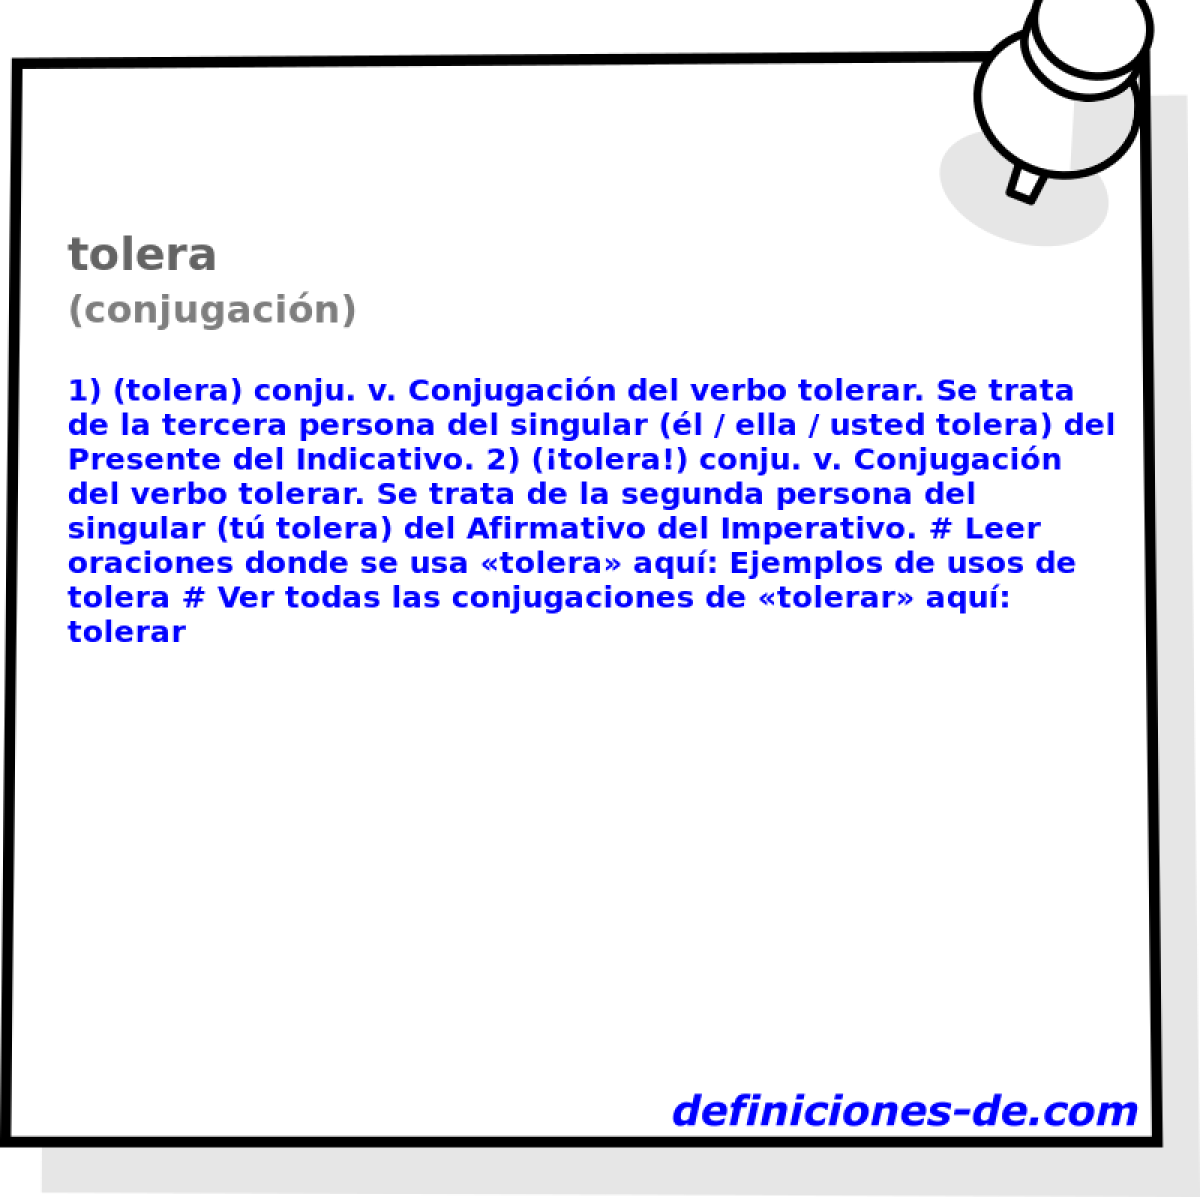 tolera (conjugacin)